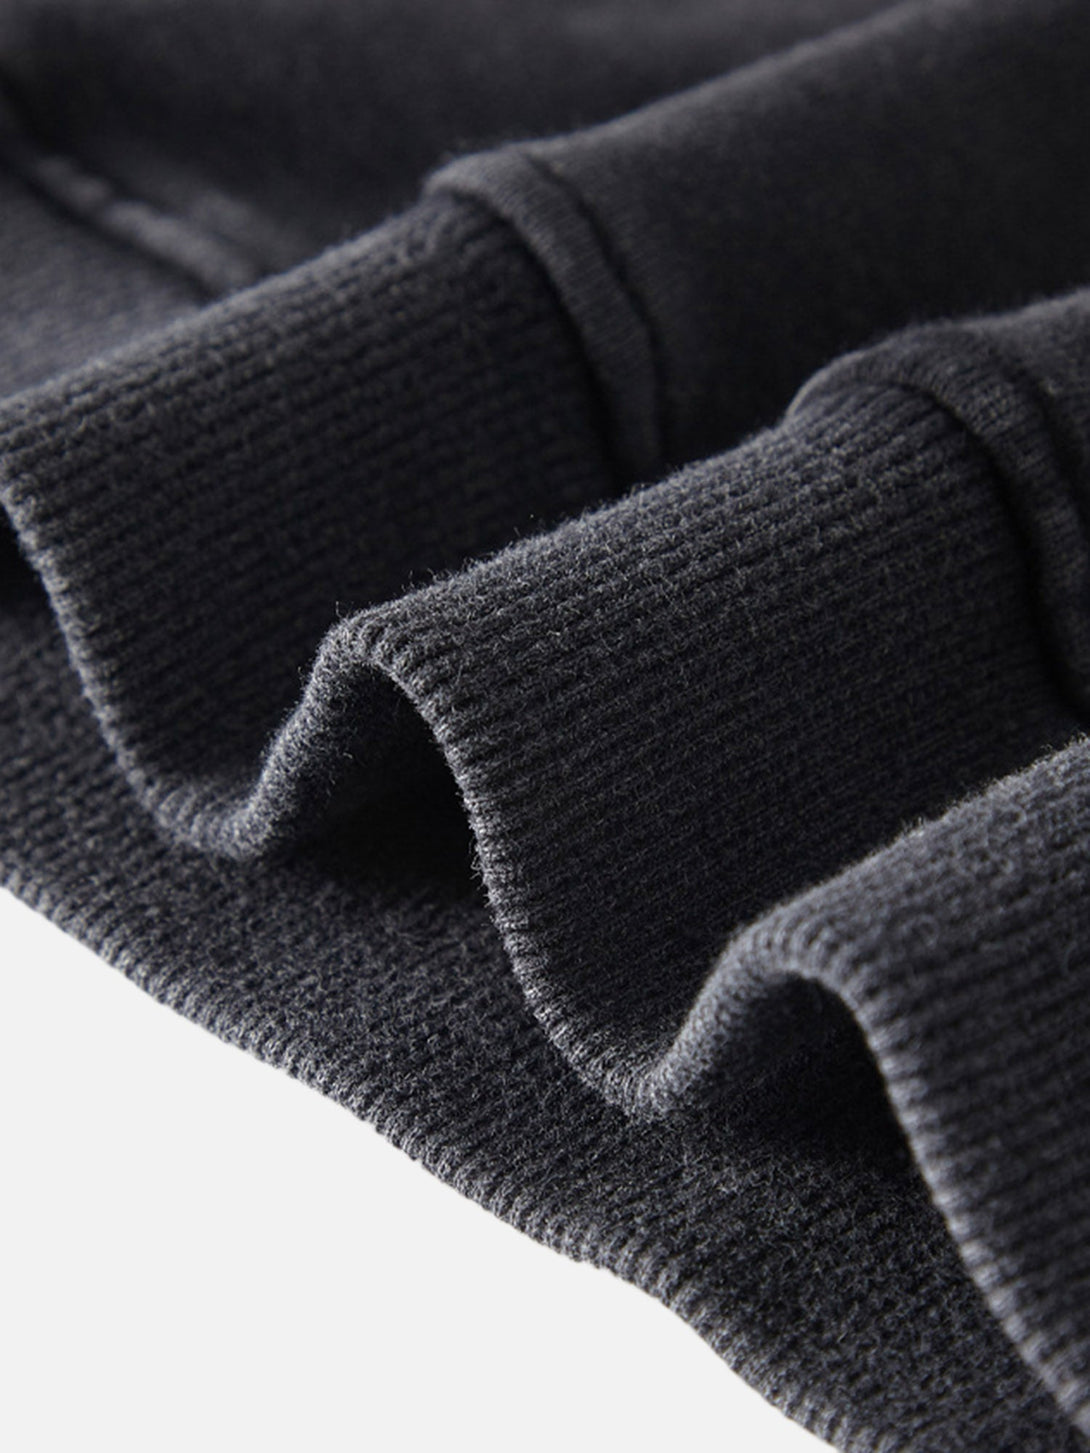 Majesda® - Batik Distressed Loose Round Neck Sweatshirt - 1898- Outfit Ideas - Streetwear Fashion - majesda.com